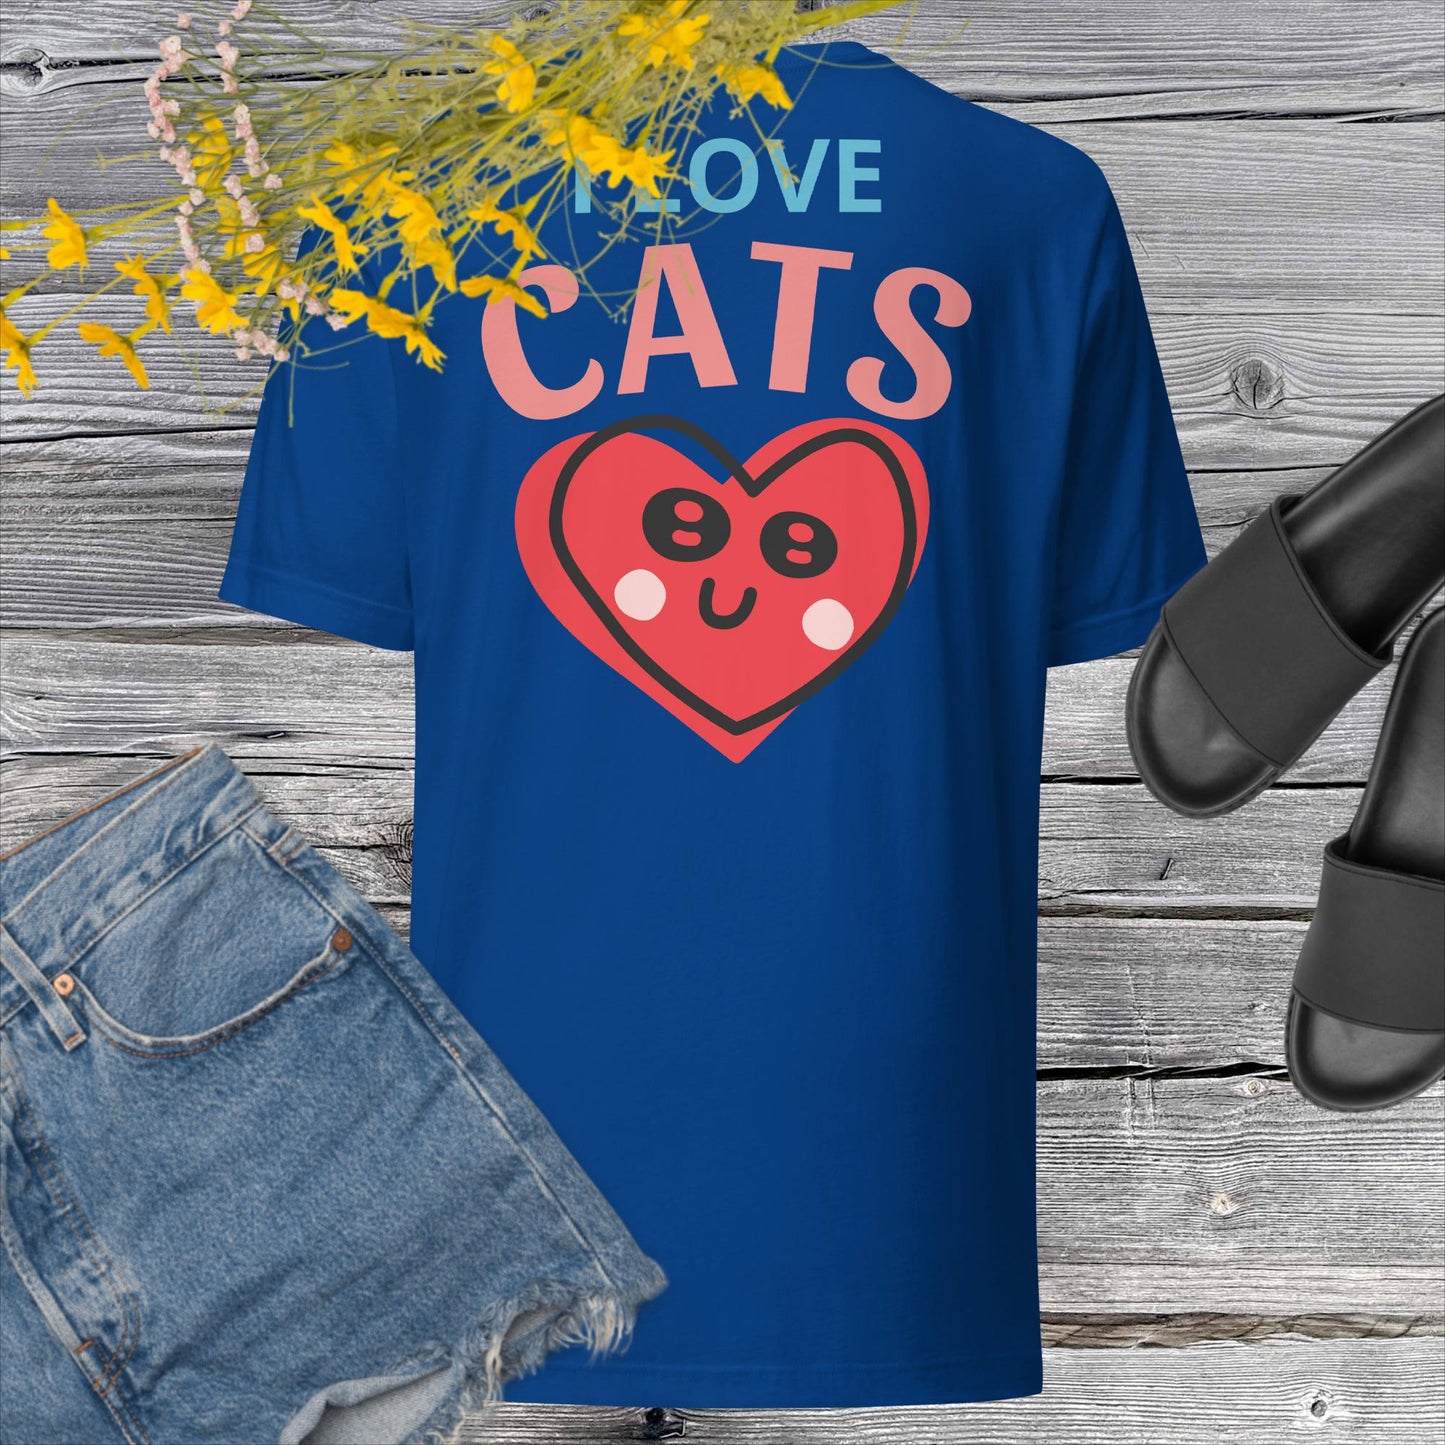 Unisex t-shirt for cat lovers.